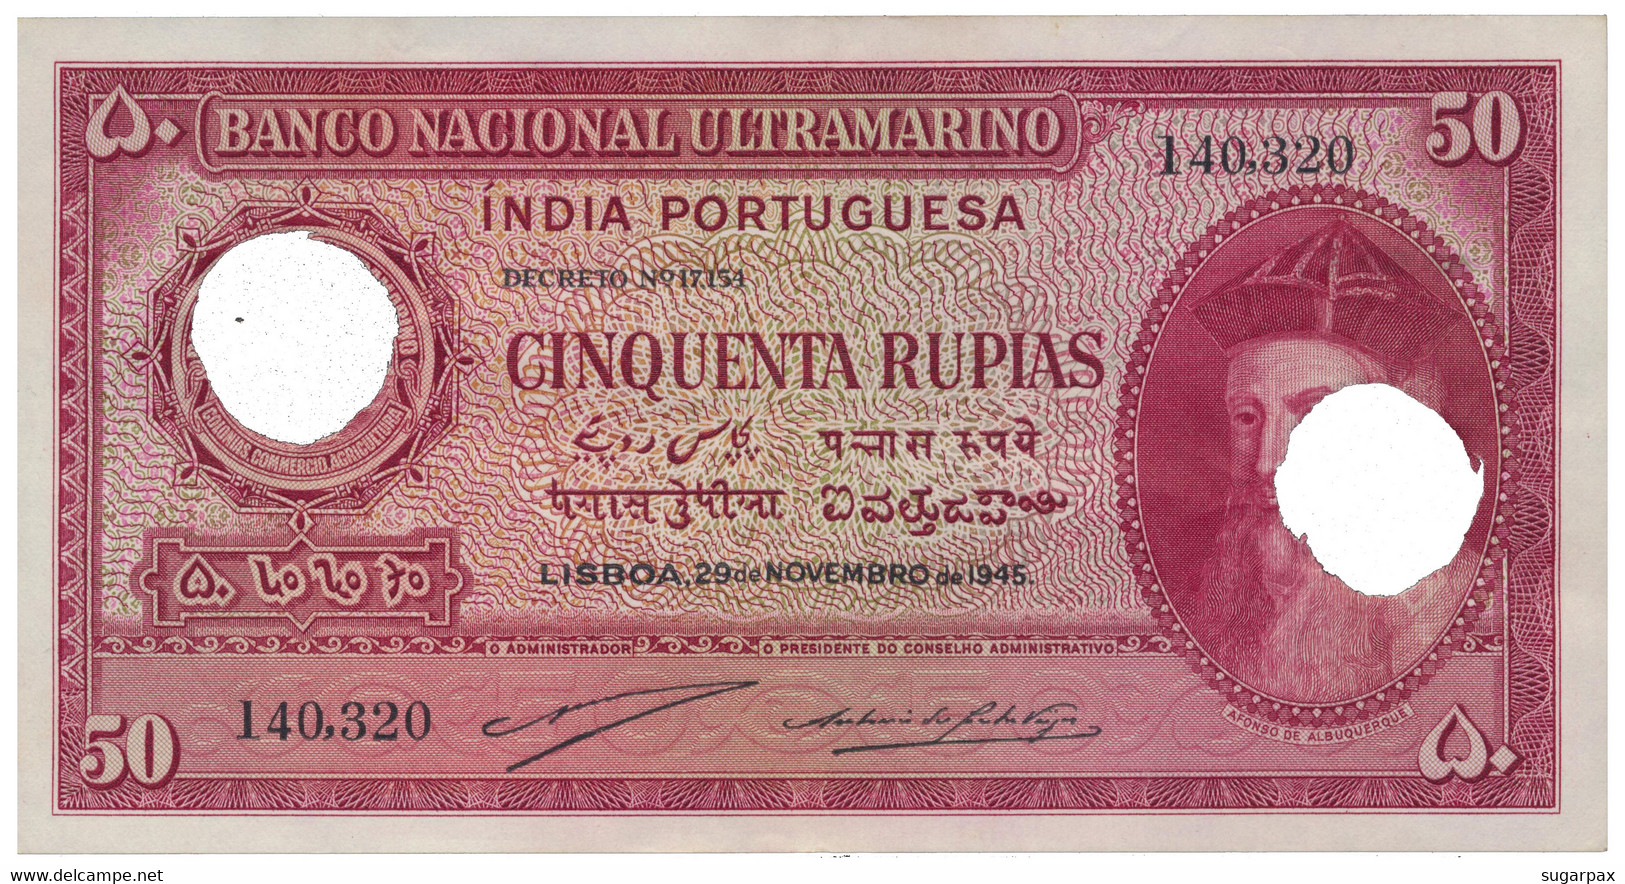 Portuguese INDIA - 50 RUPIAS - 29.11.1945 - Pick 38 - Canceled With Two Holes - Afonso De Albuquerque - Portugal